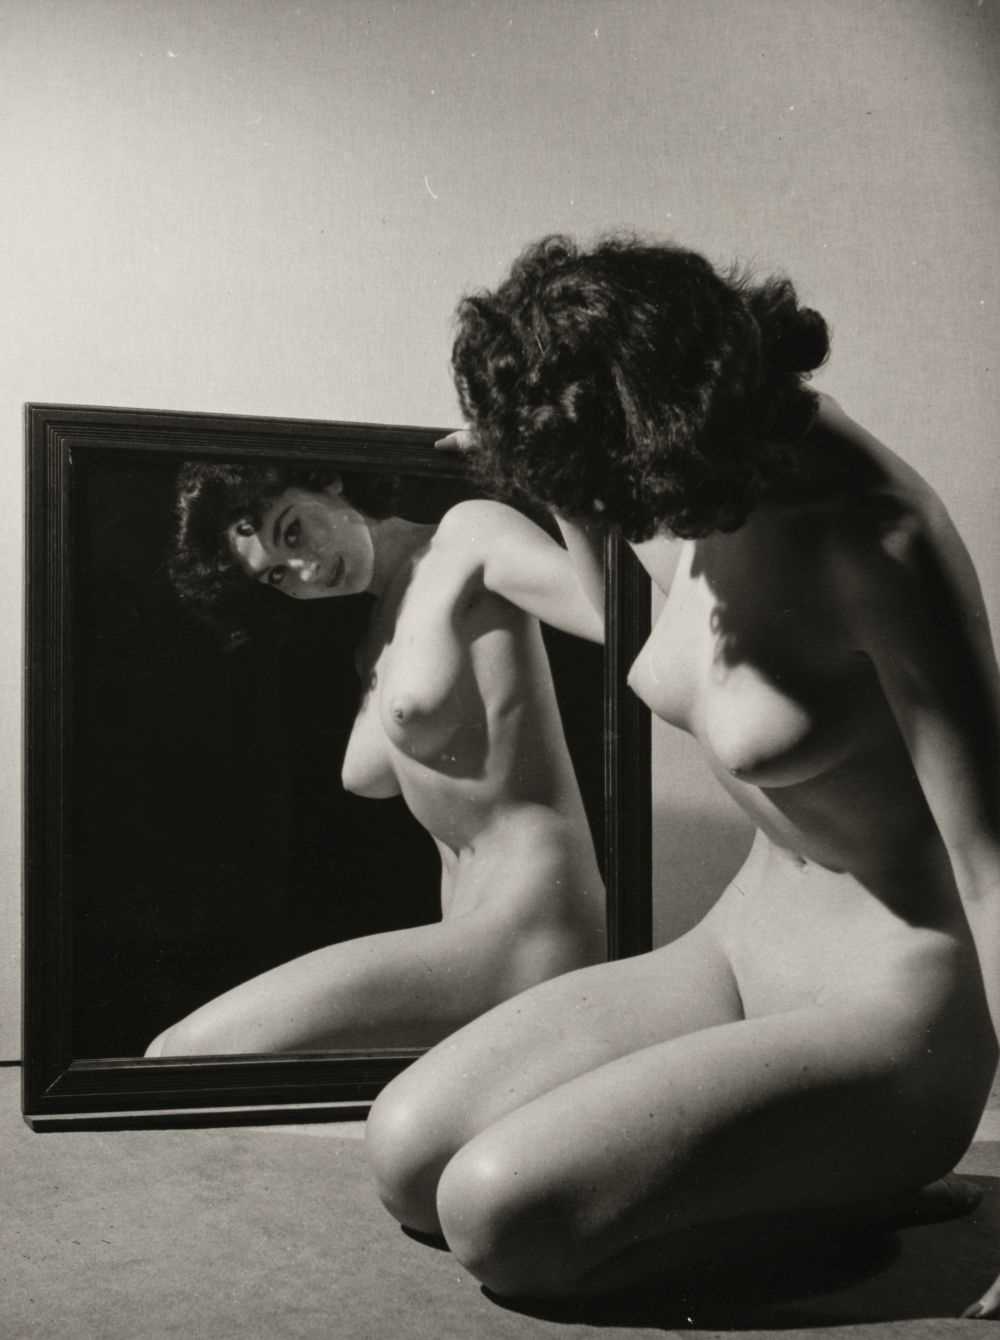 1940 Nudes - Lot 45 - Female Nudes. A group of 32 vintage gelatin